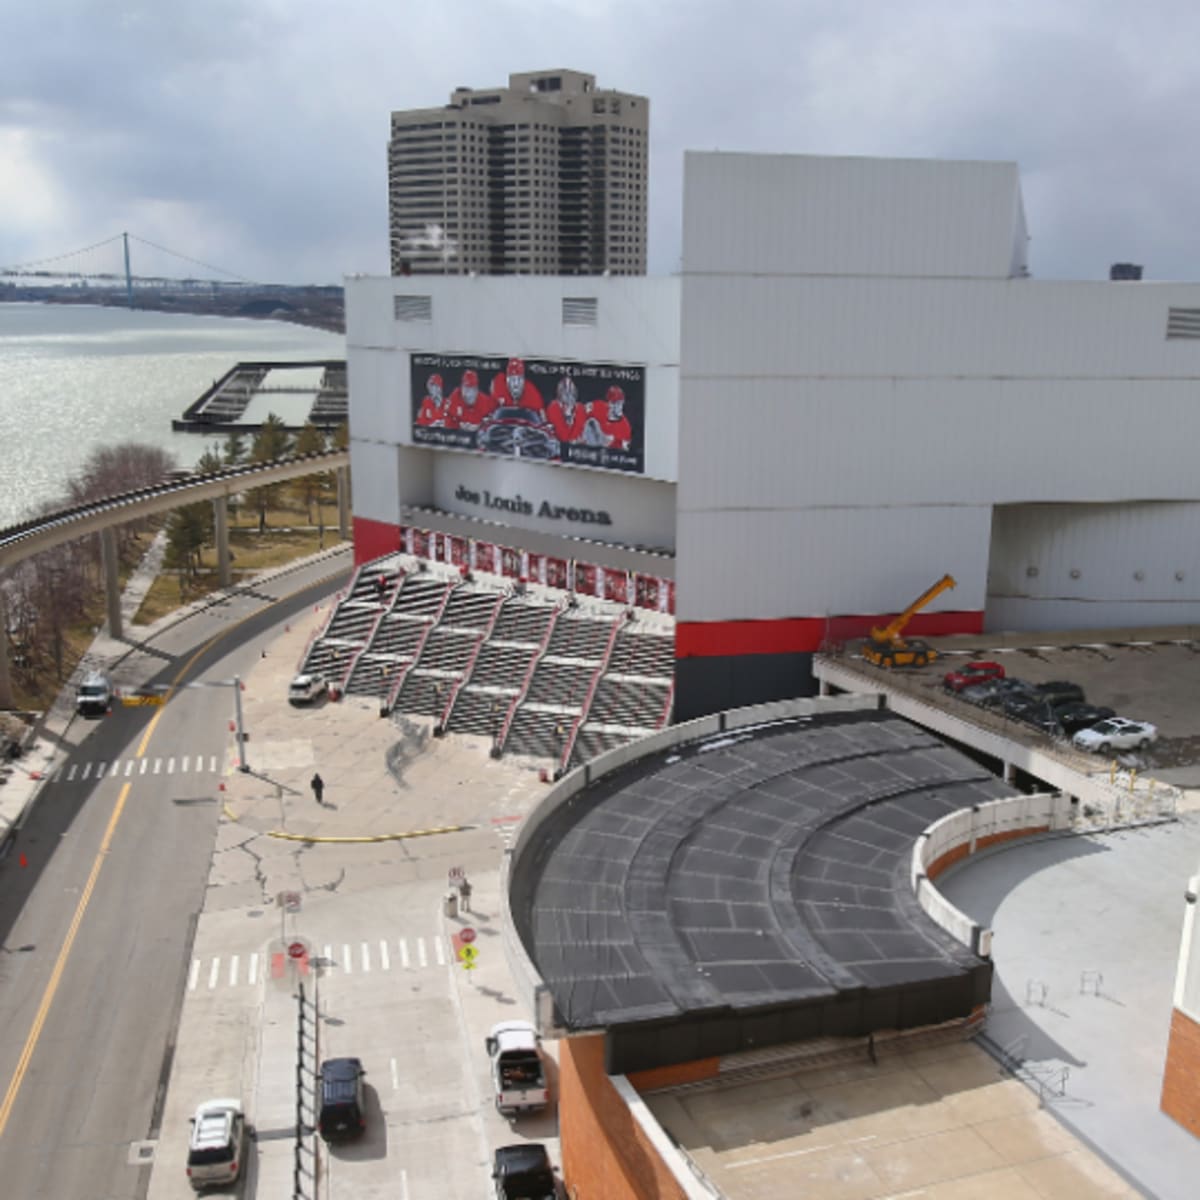 Detroit to raze Joe Louis Arena as part of bankruptcy deal